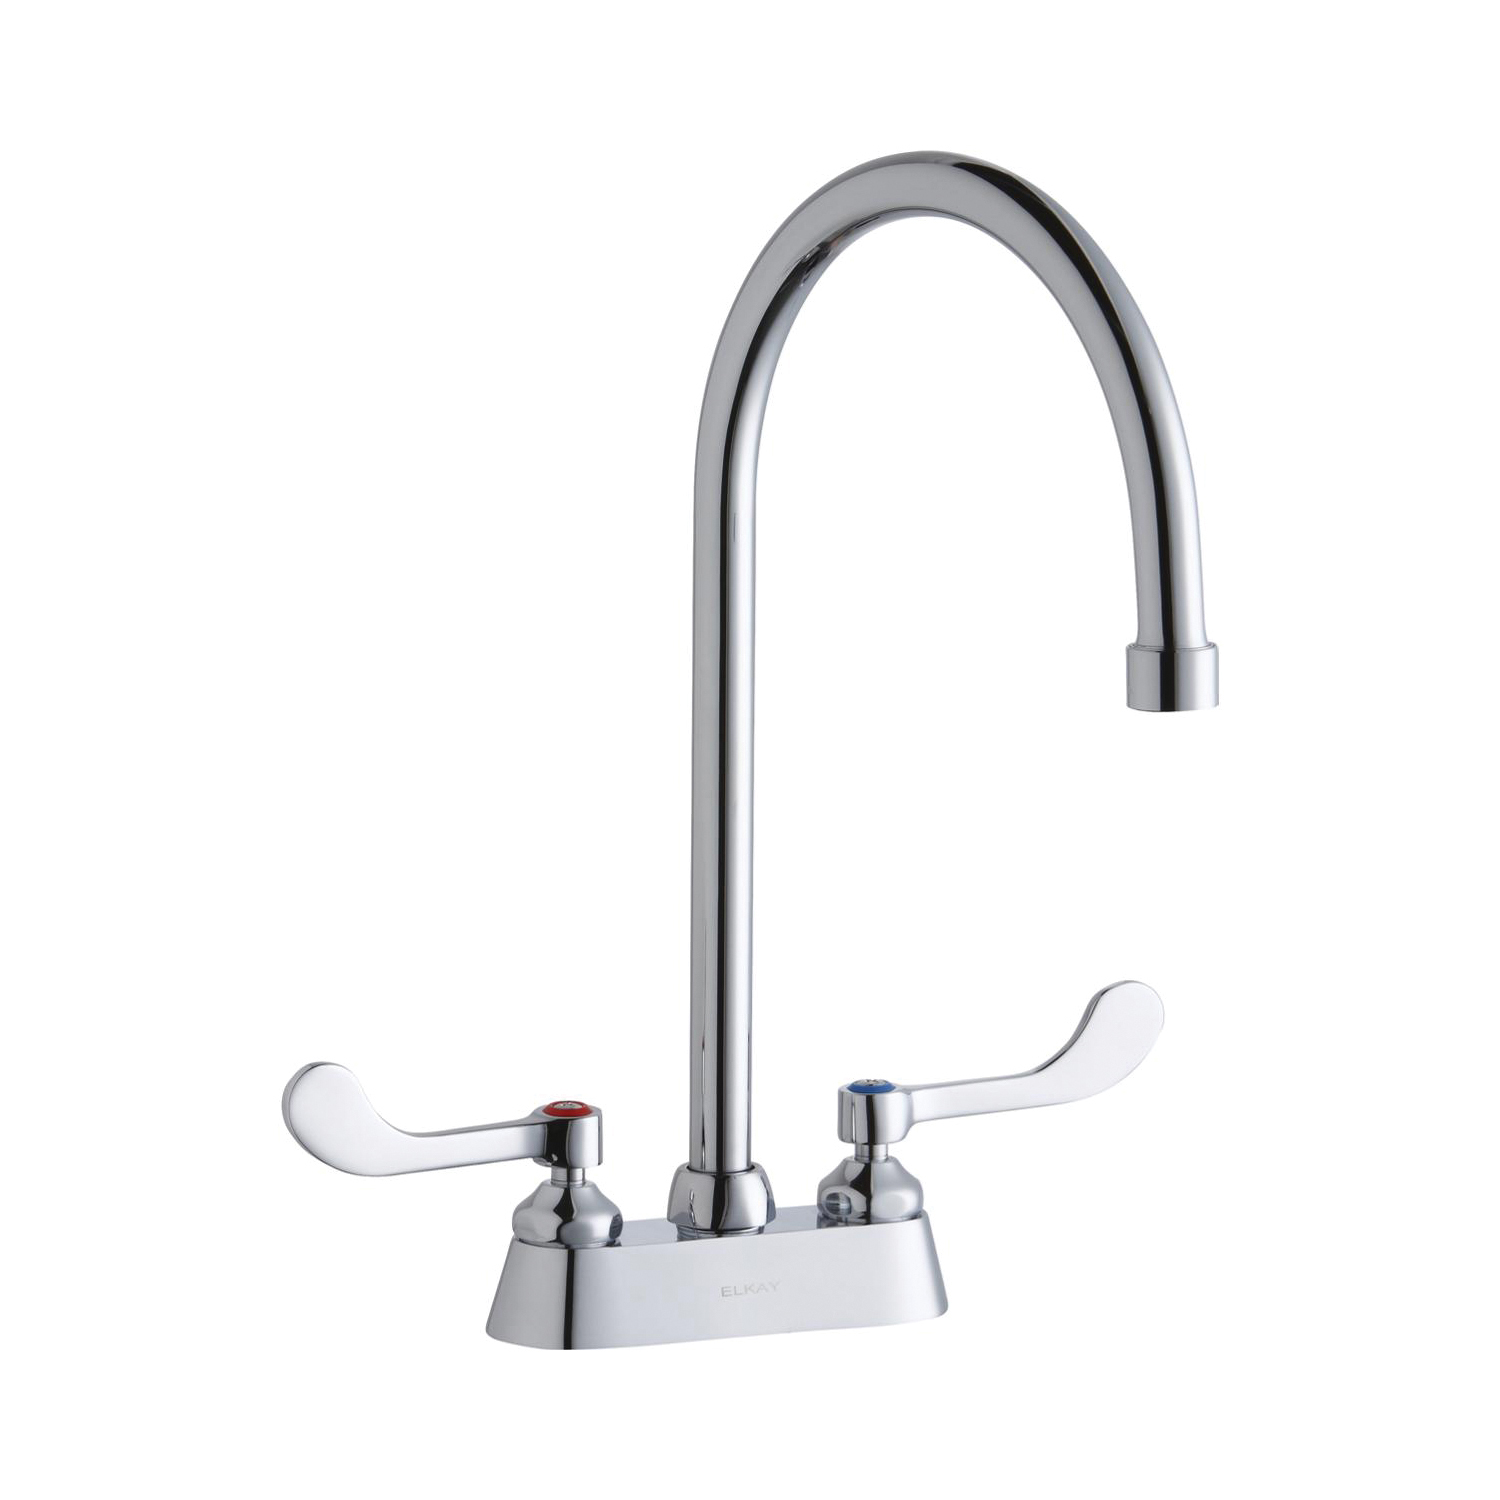 Elkay® LK406GN08T4 Centerset Bathroom Faucet, Chrome Plated, 2 Handles, 1.5 gpm